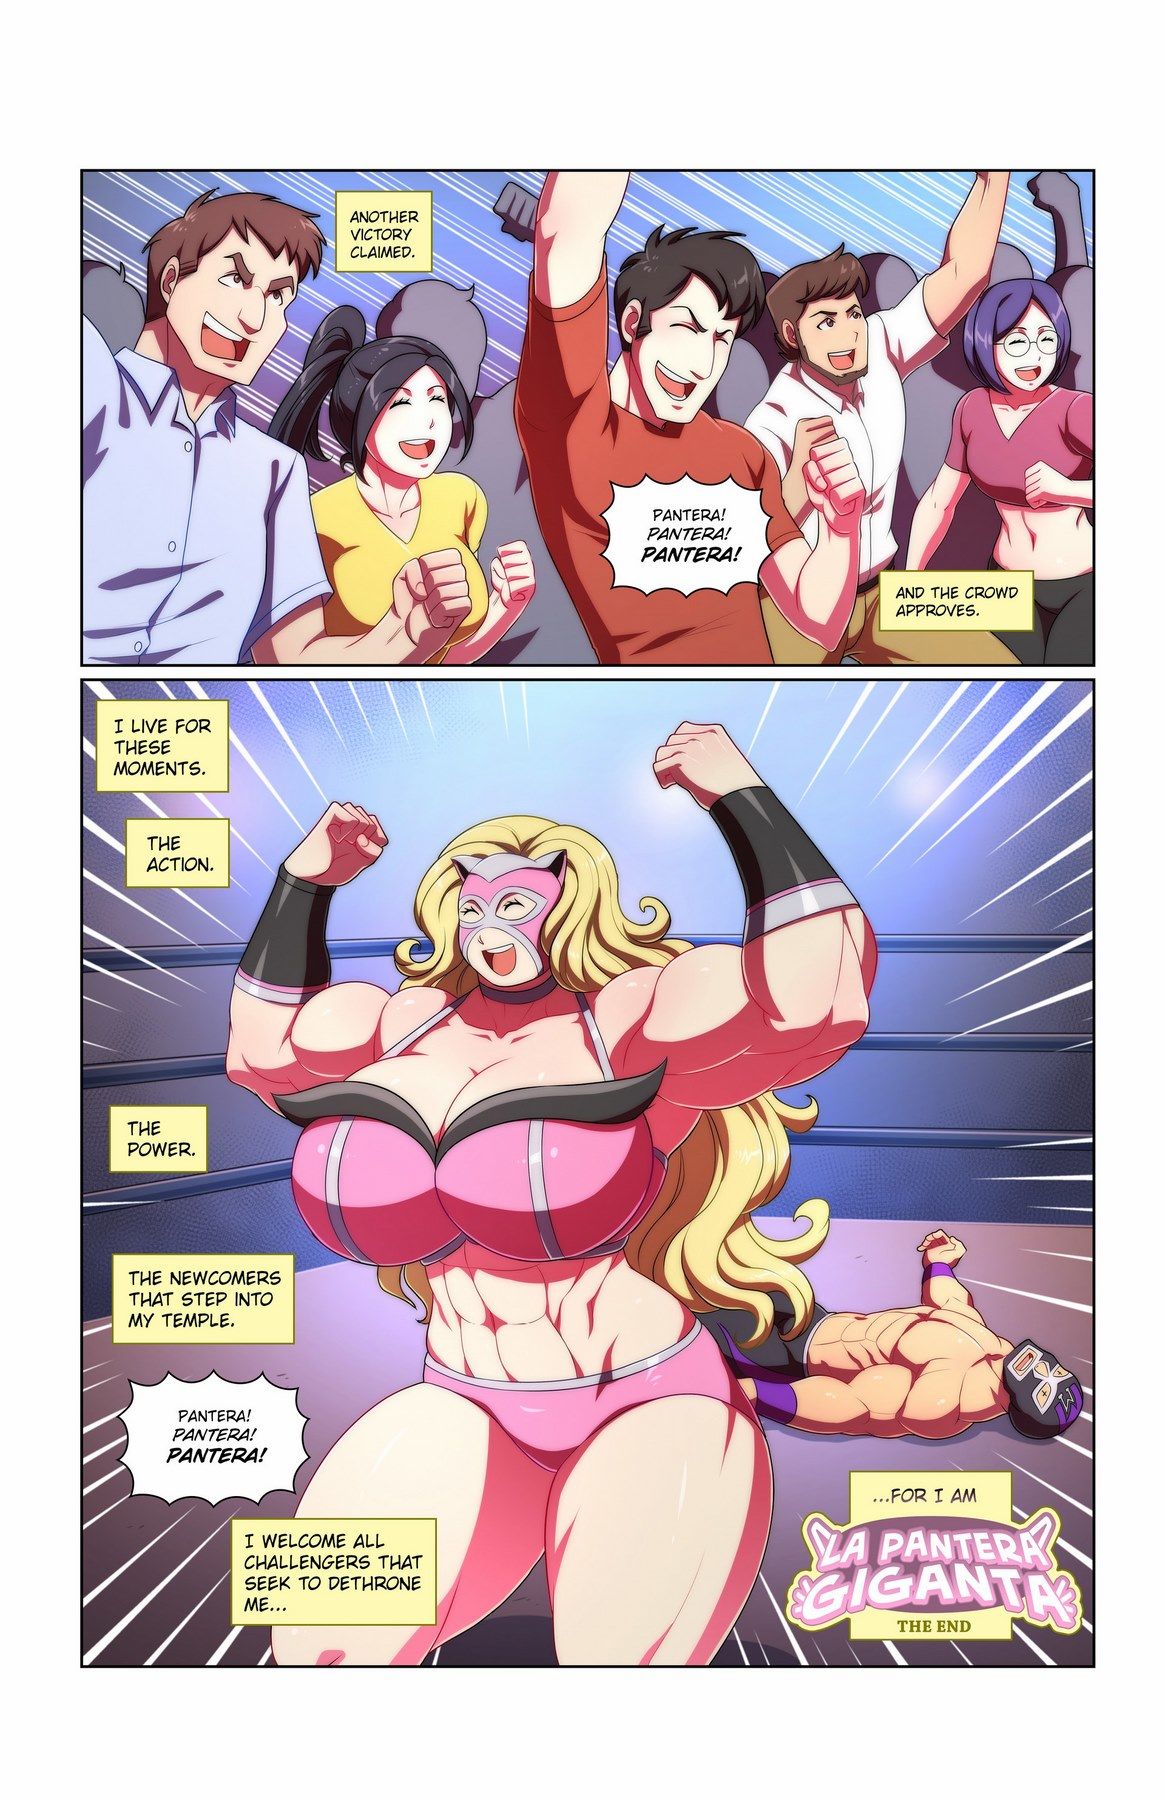 La Pantera Giganta MuscleFan page 12